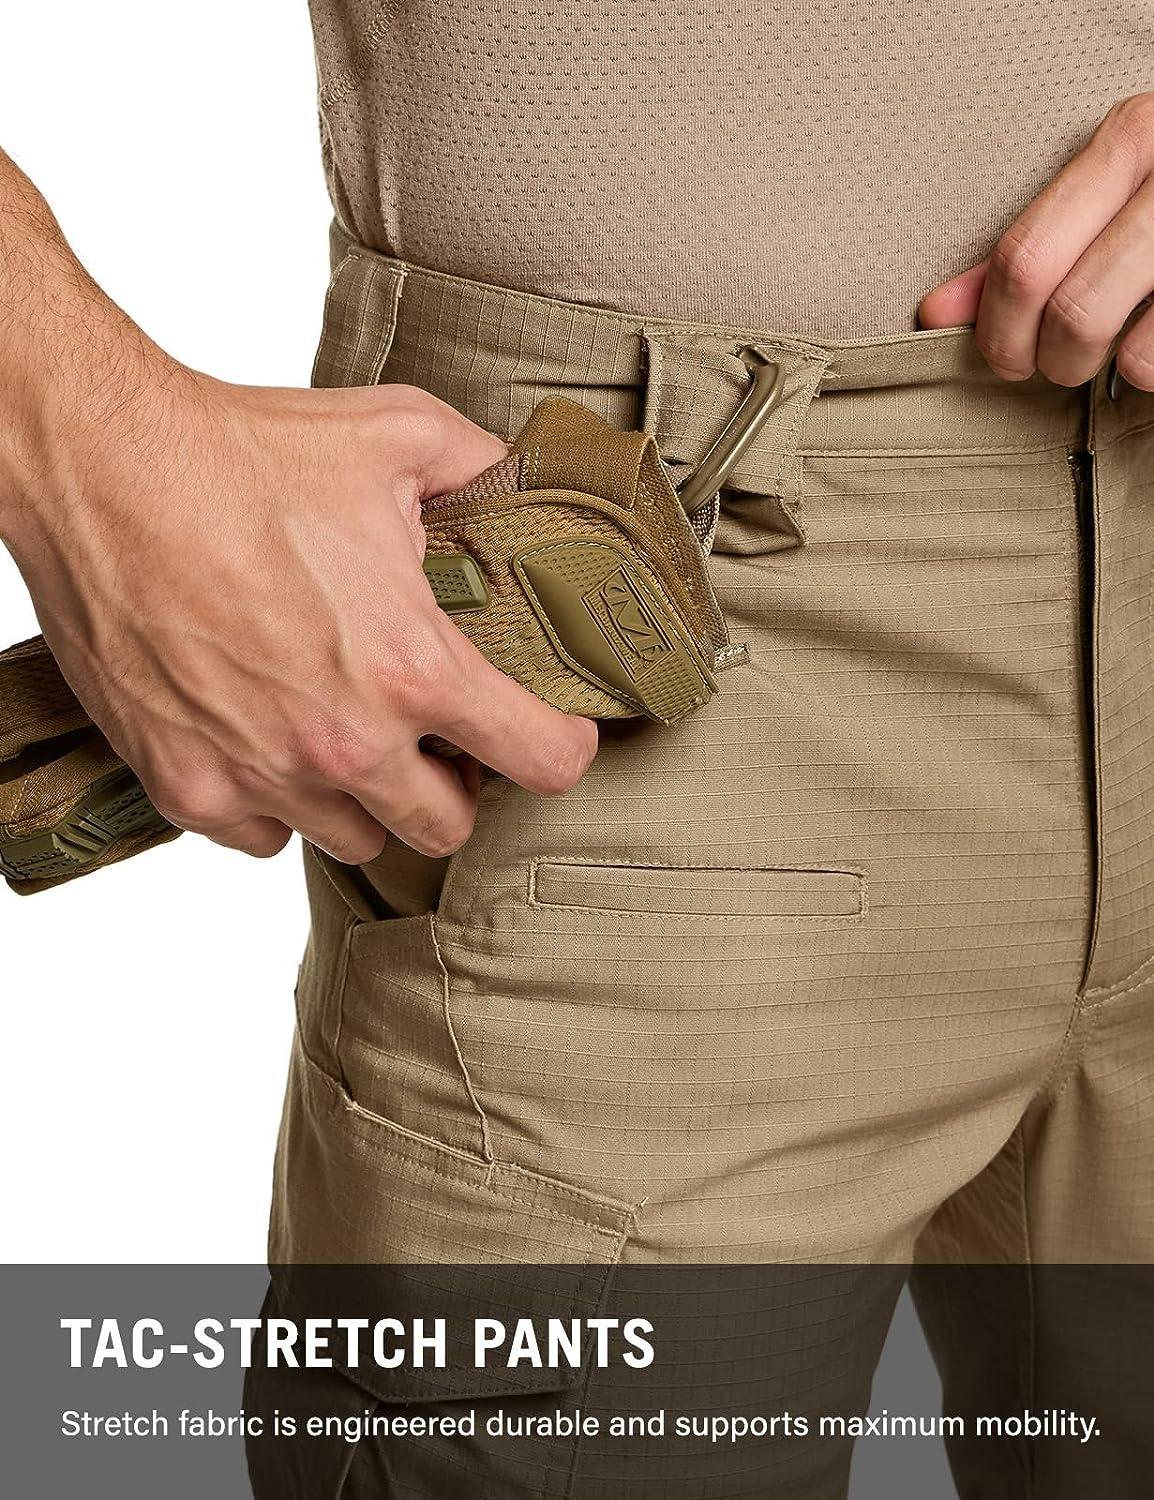 CQR Men's Flex Stretch Tactical Pants, Water Resistant Ripstop